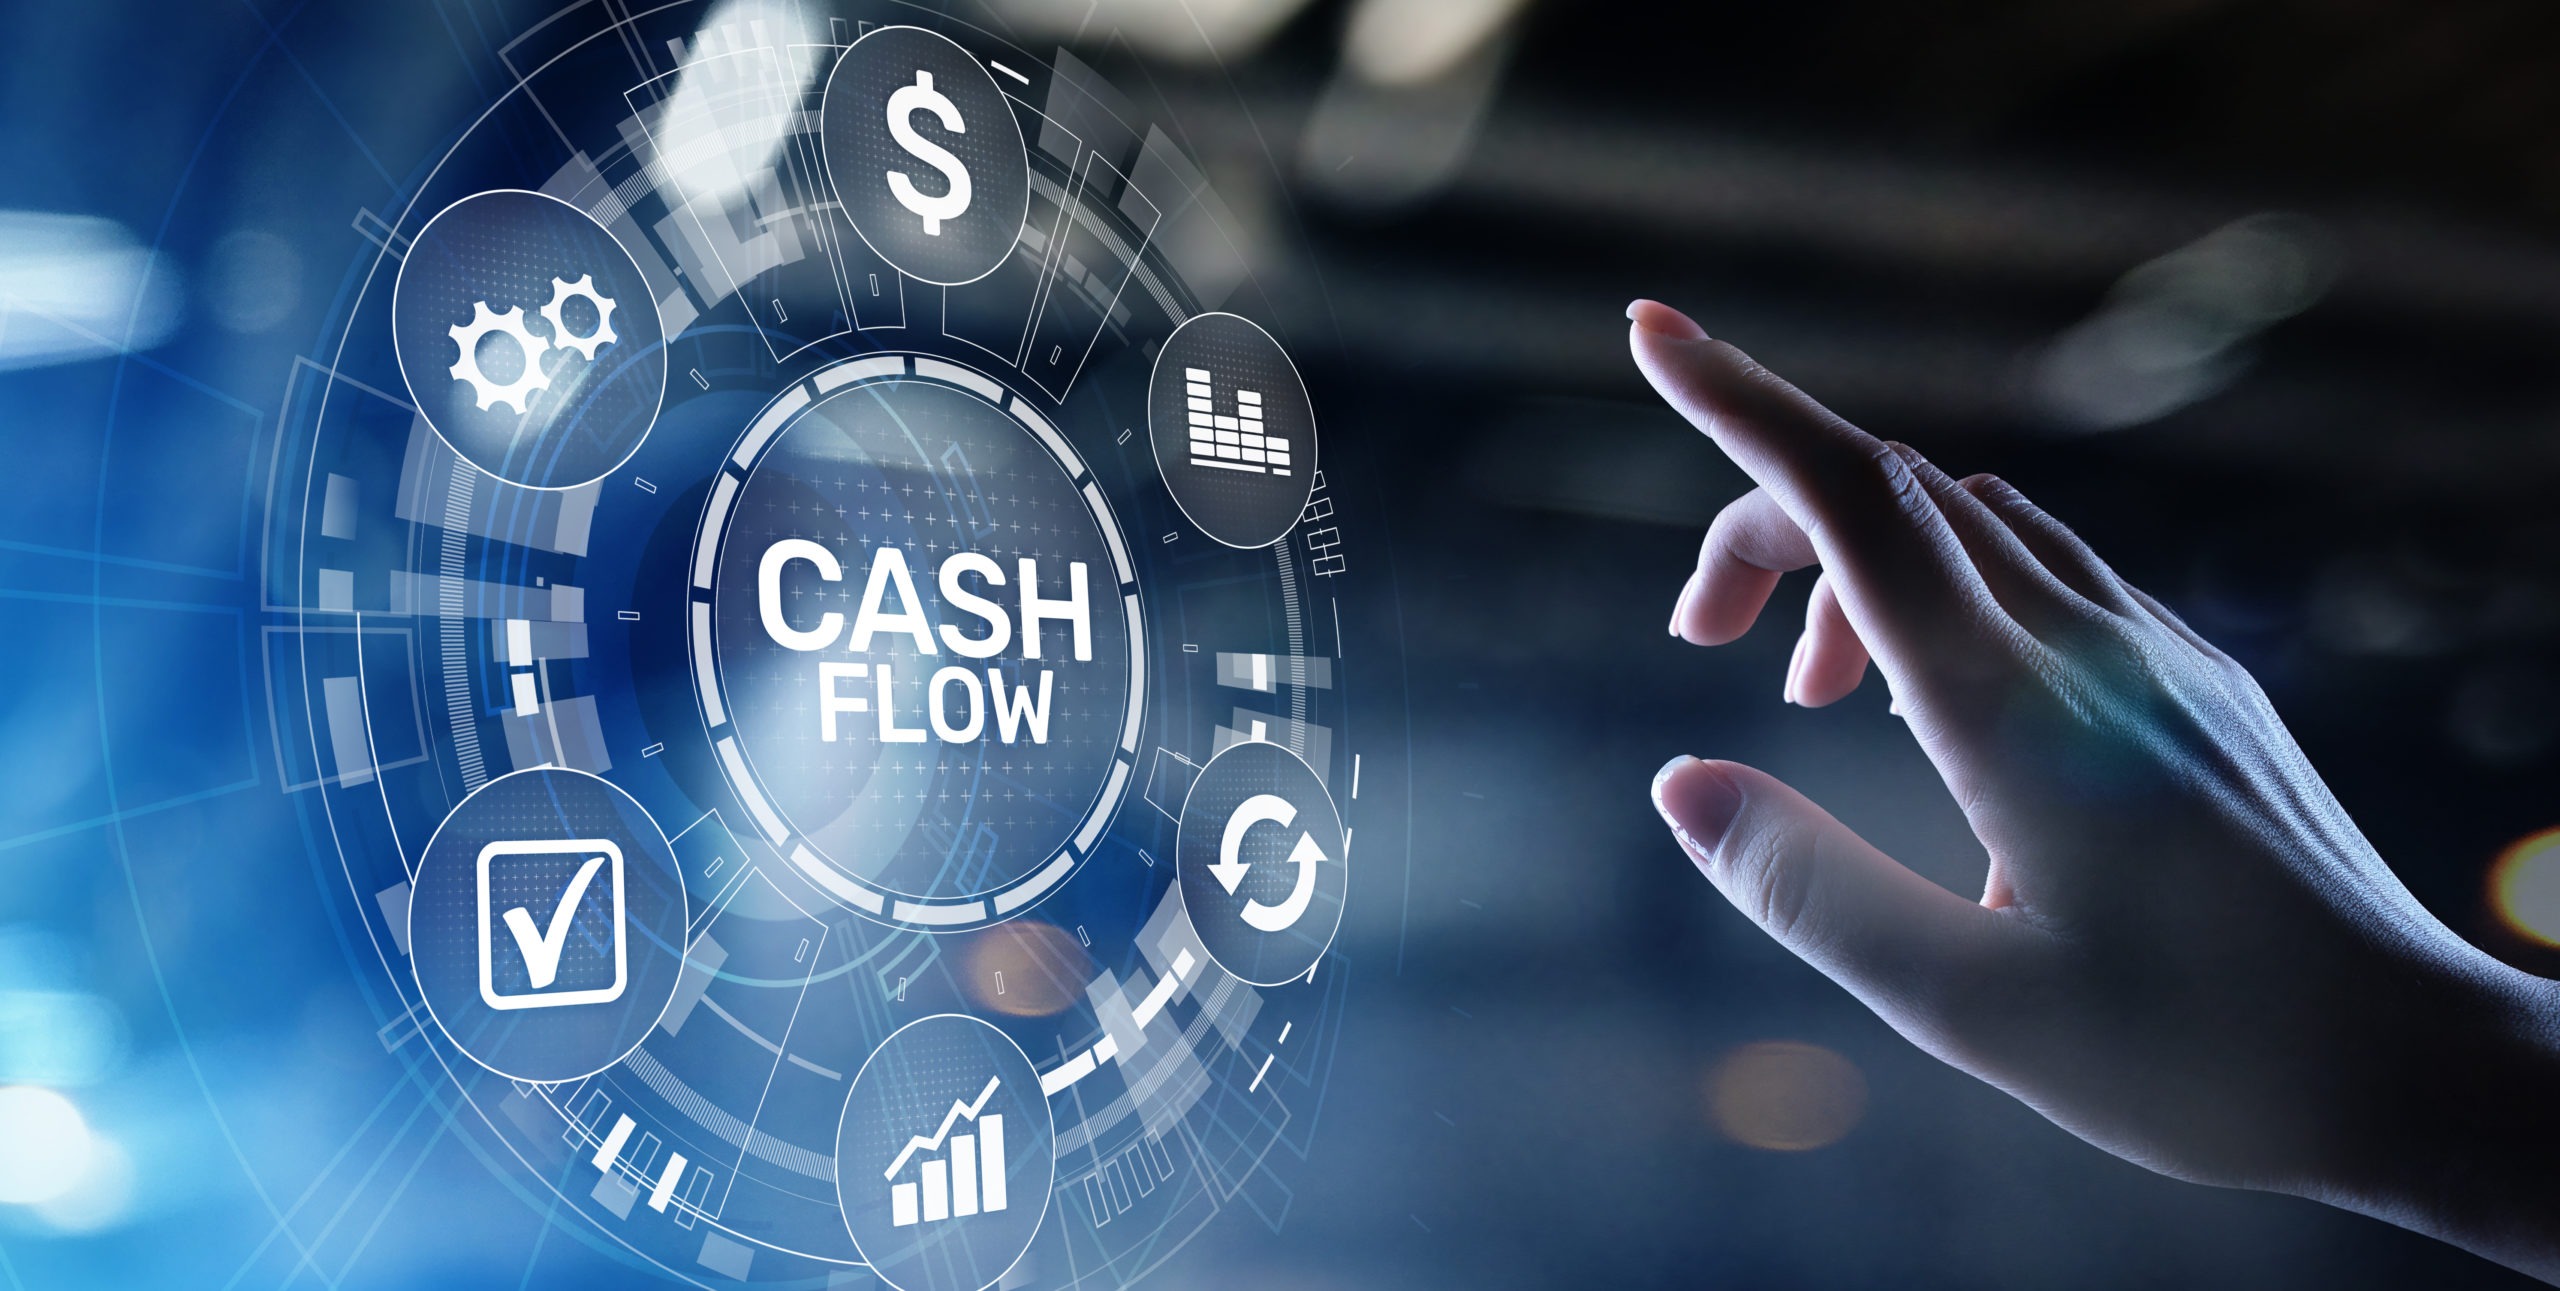 Cash flow button on virtual screen. Business Tehcnology concept.